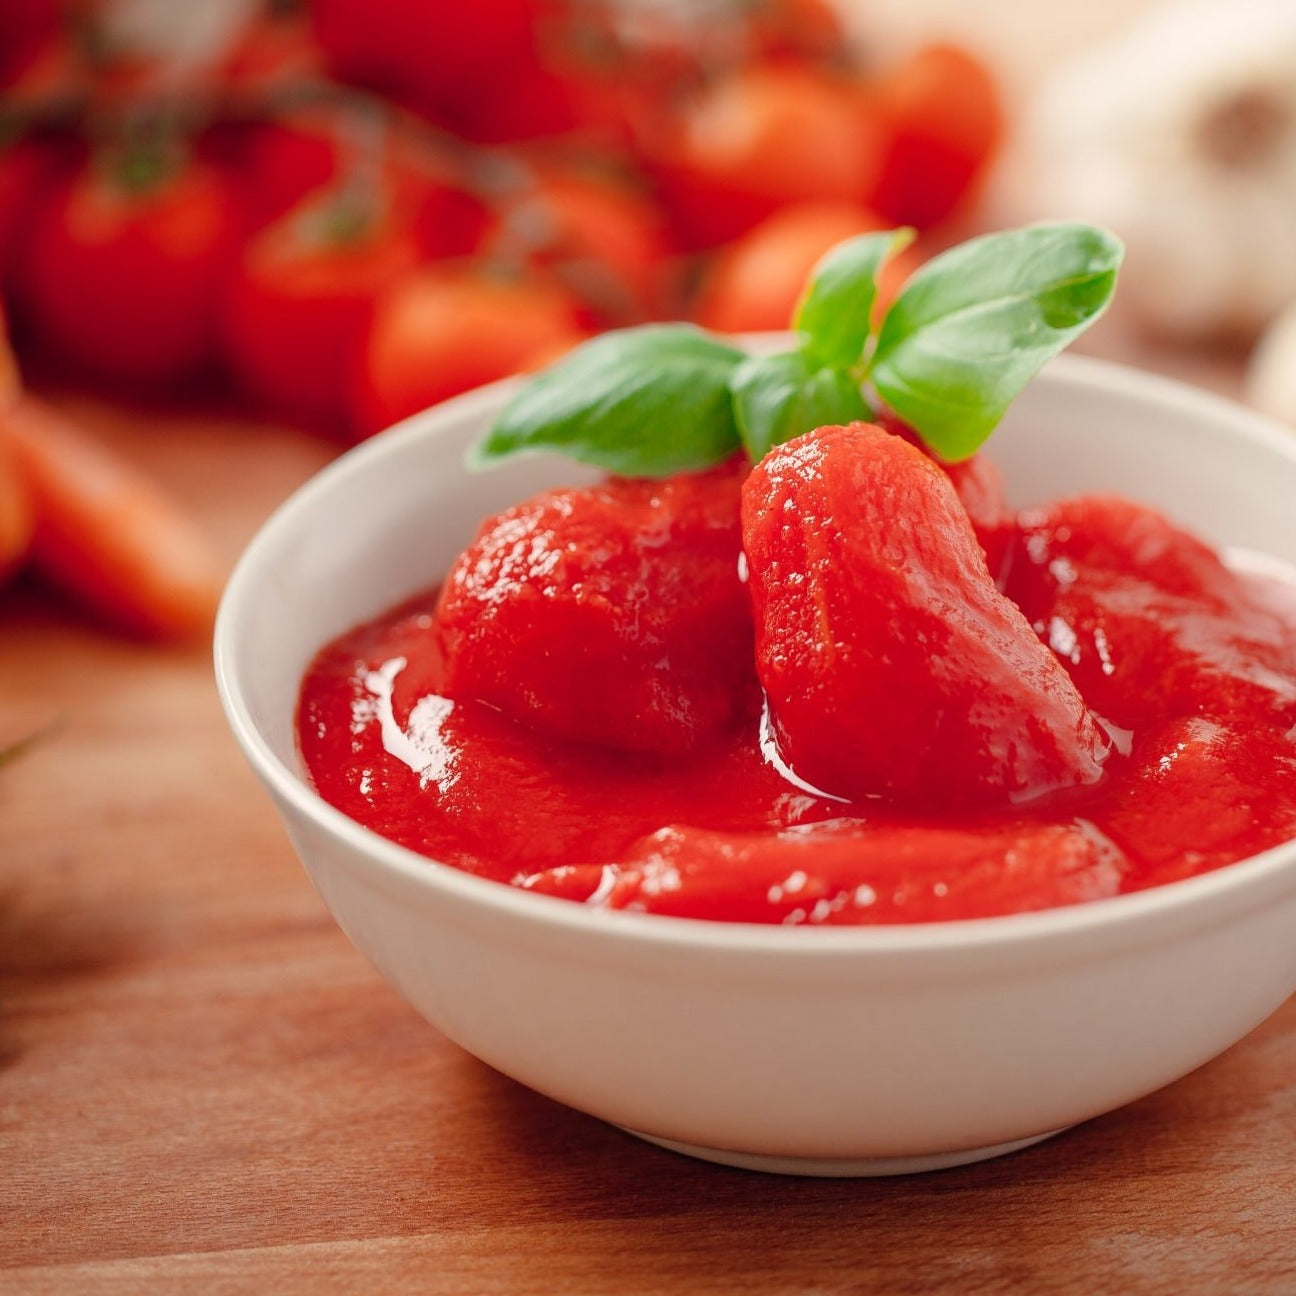 Peeled Tomatoes_Isola Imports Inc._Sauces & Marinades